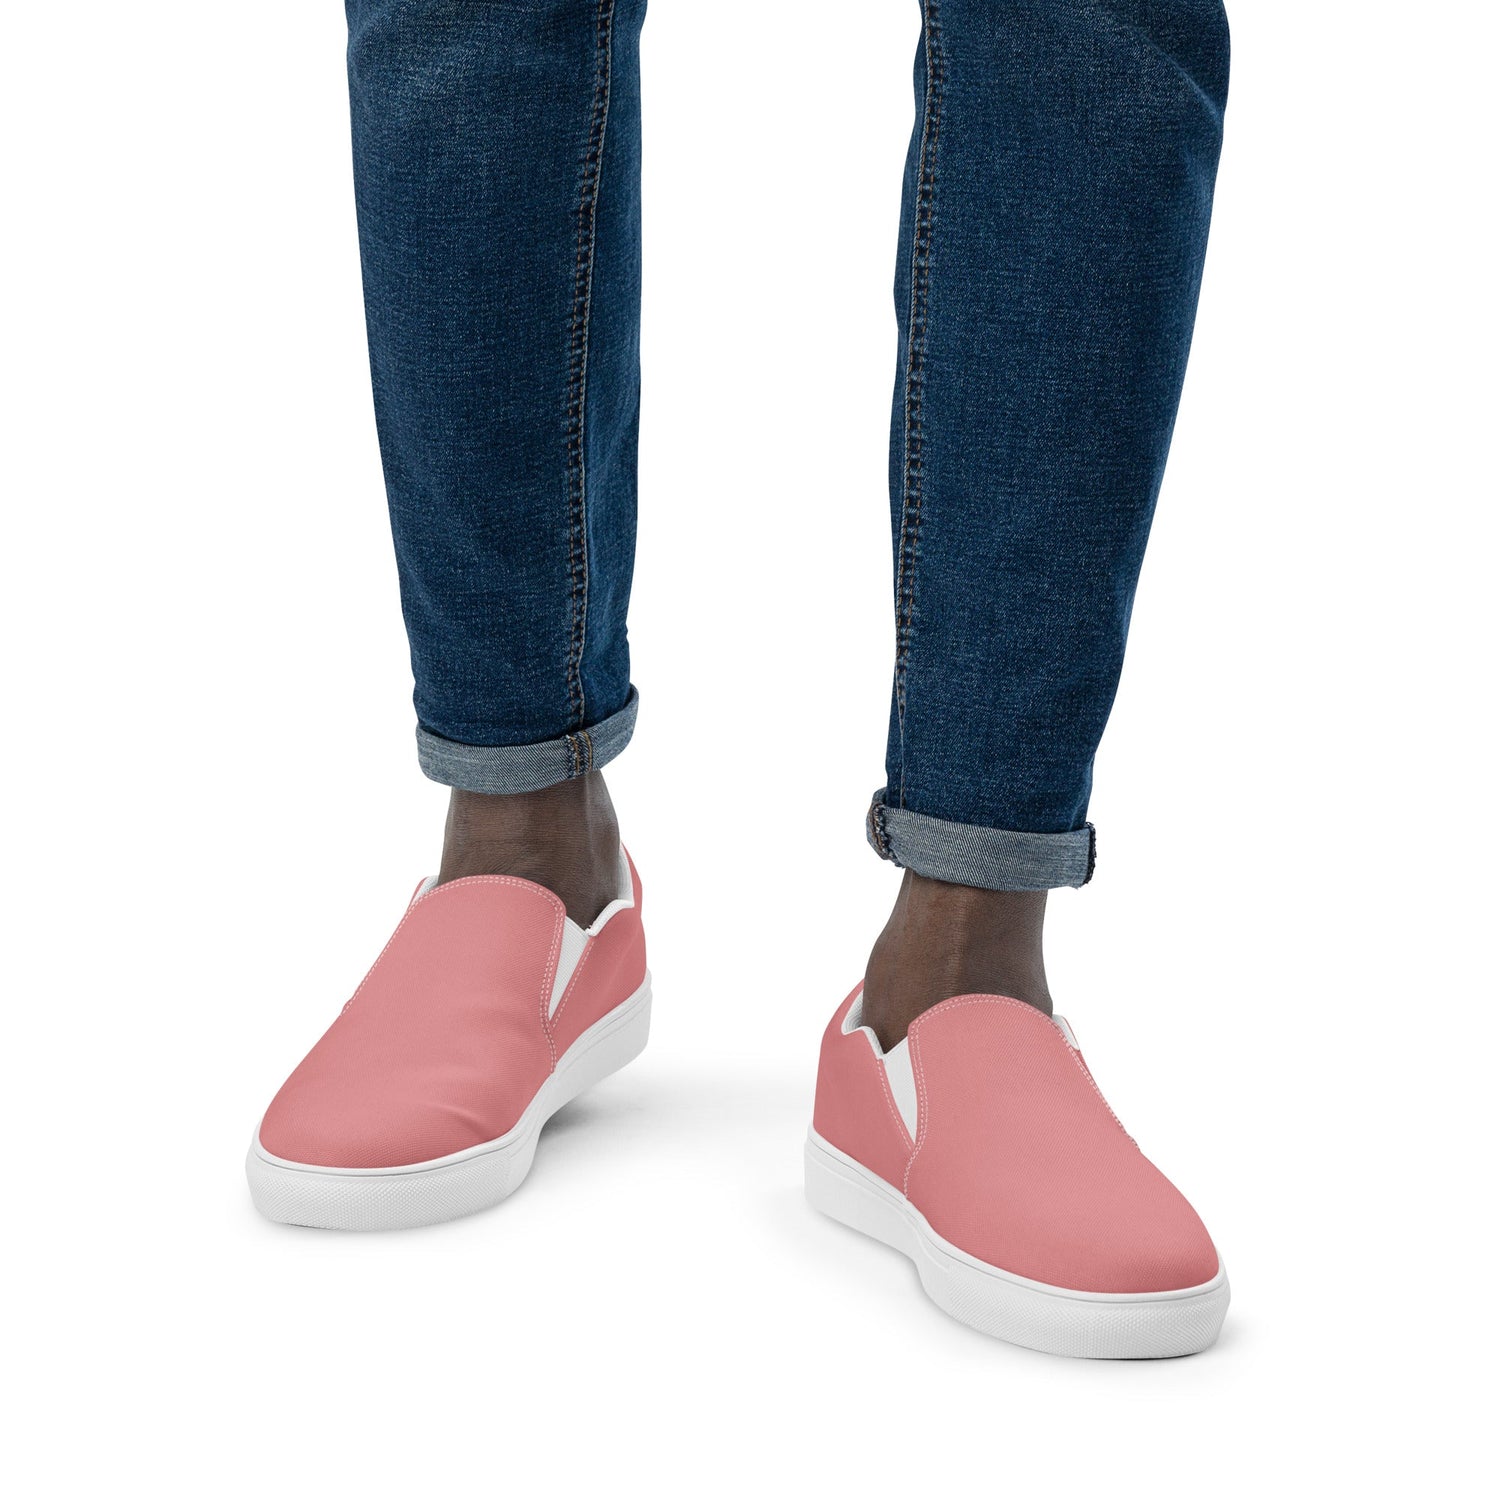 klasneakers Men’s slip-on canvas shoes - Pink